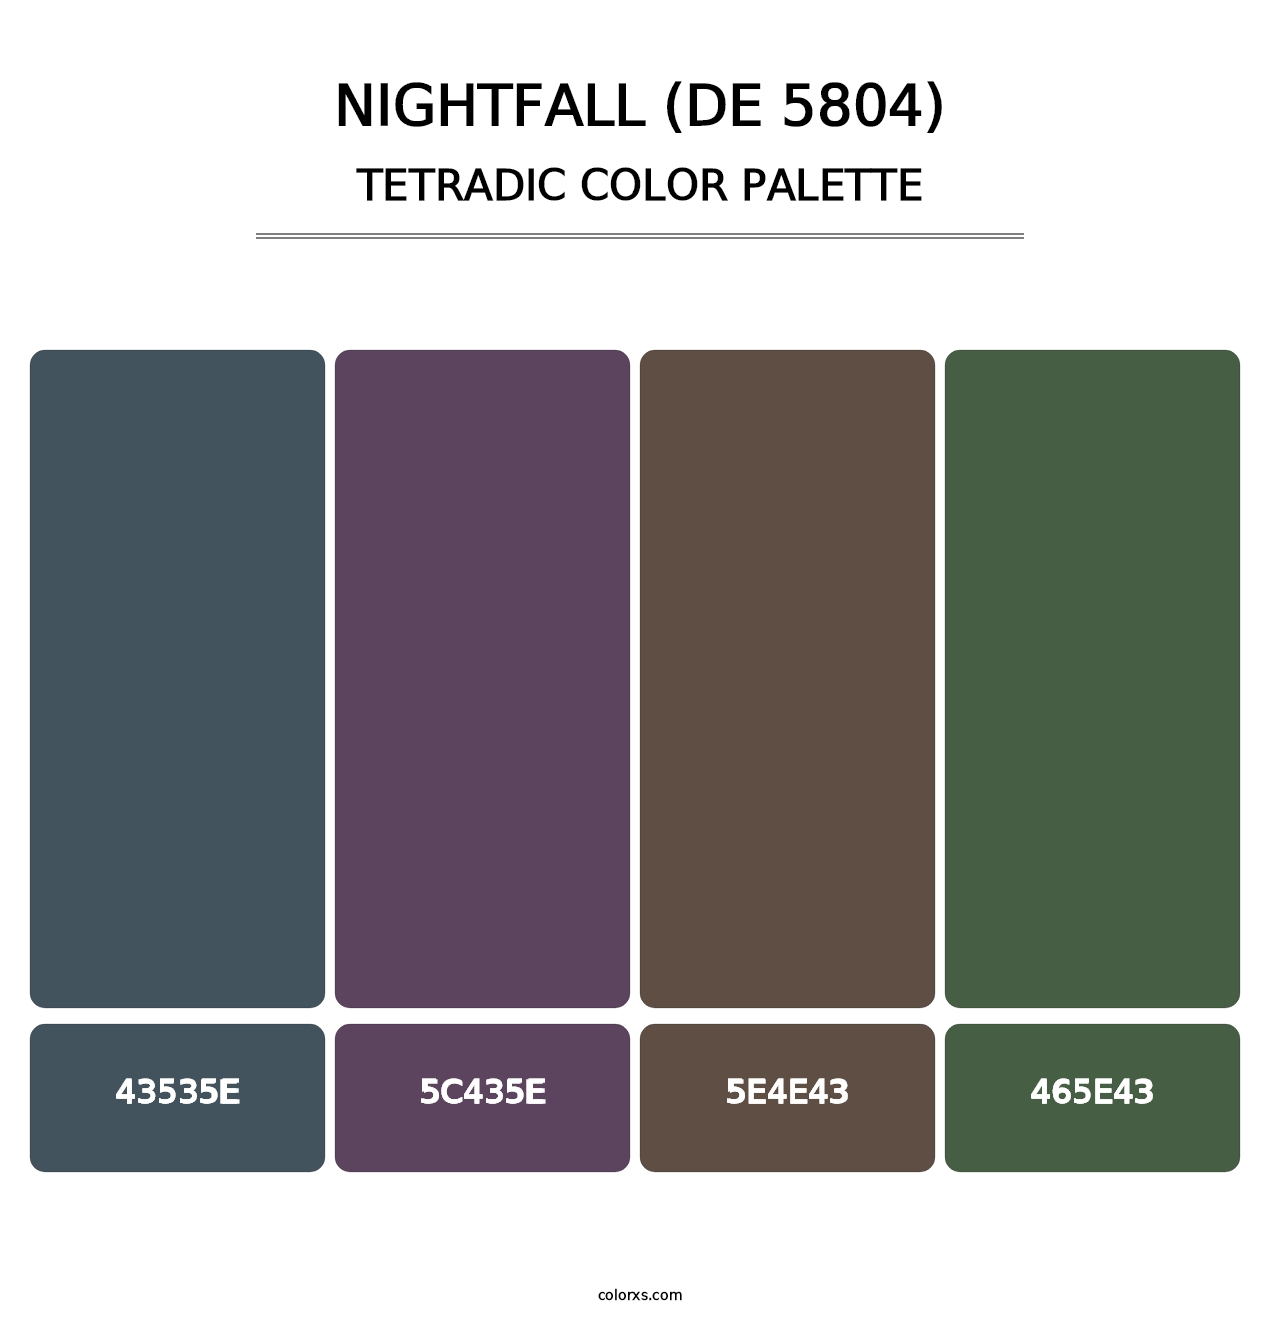 Nightfall (DE 5804) - Tetradic Color Palette